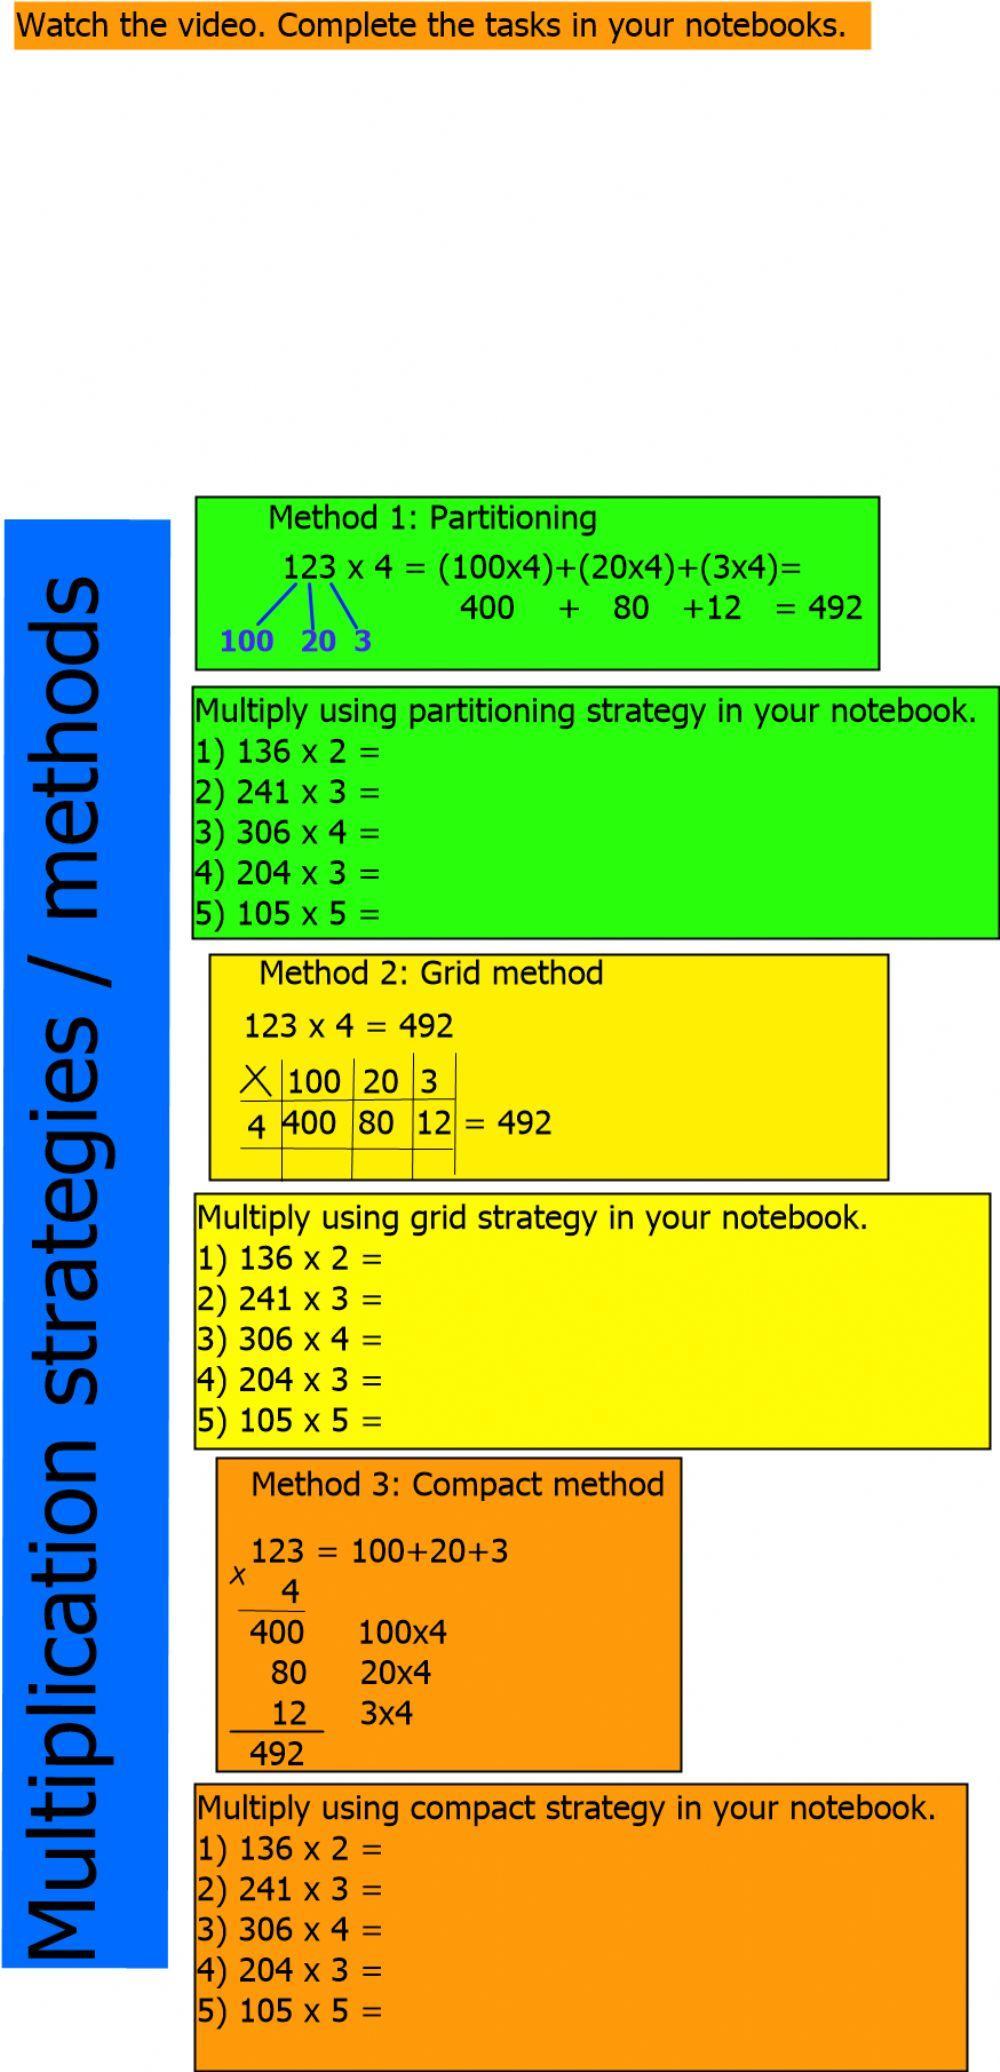 Multiplication strategies - methods